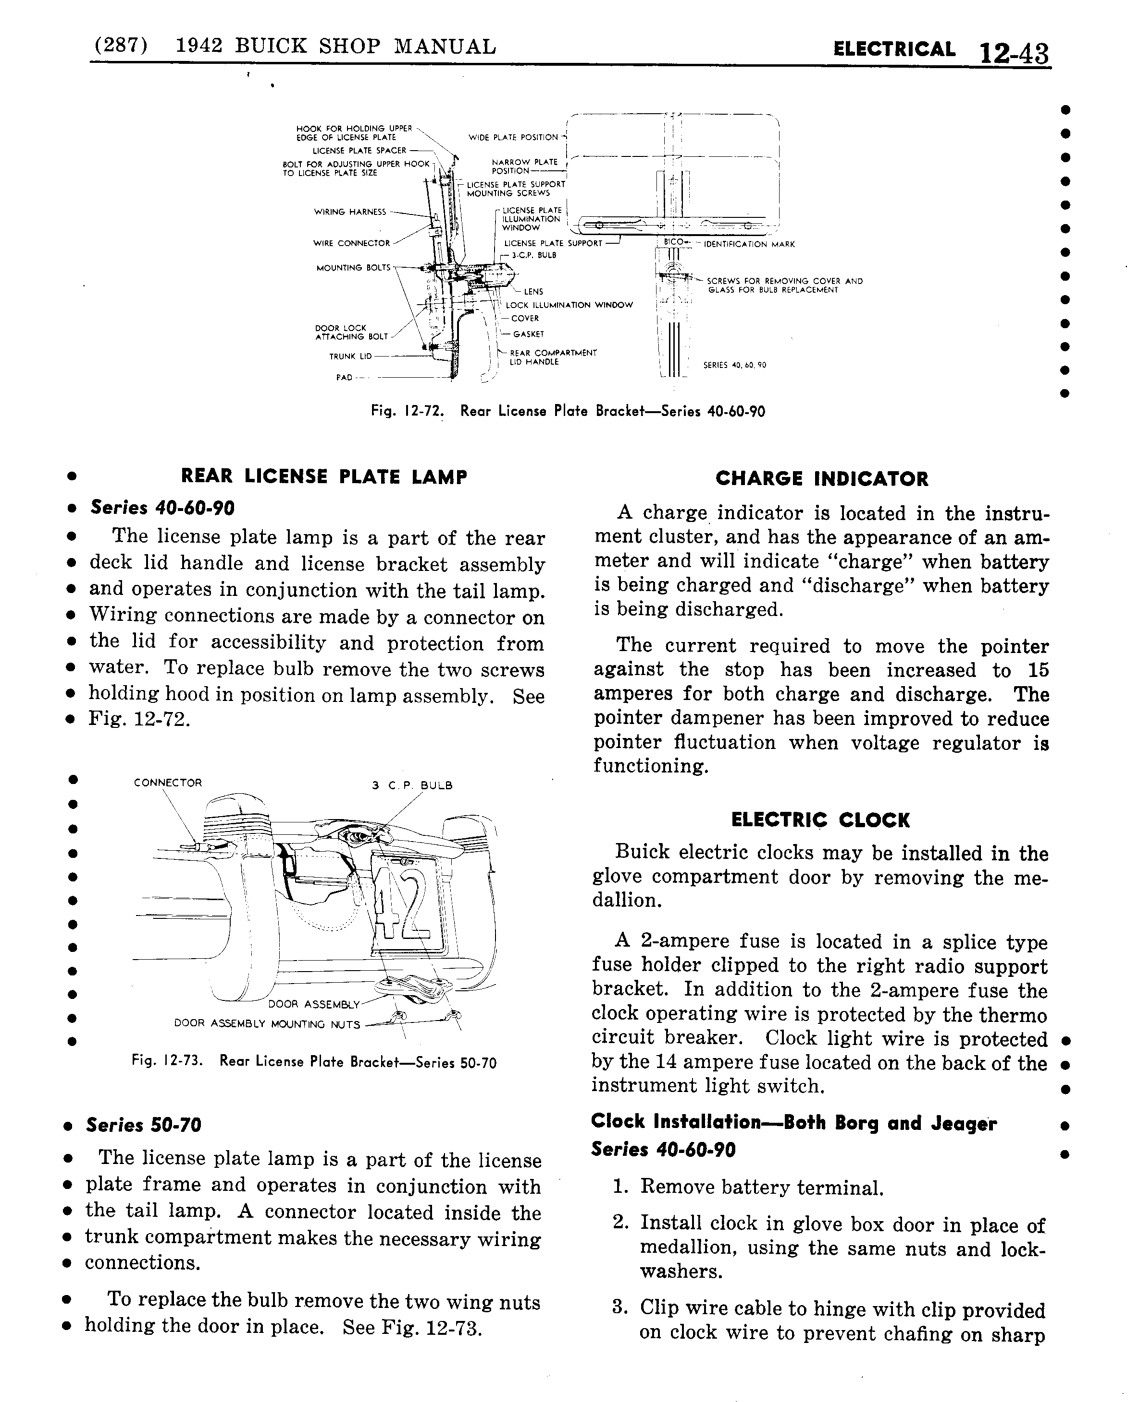 n_13 1942 Buick Shop Manual - Electrical System-043-043.jpg